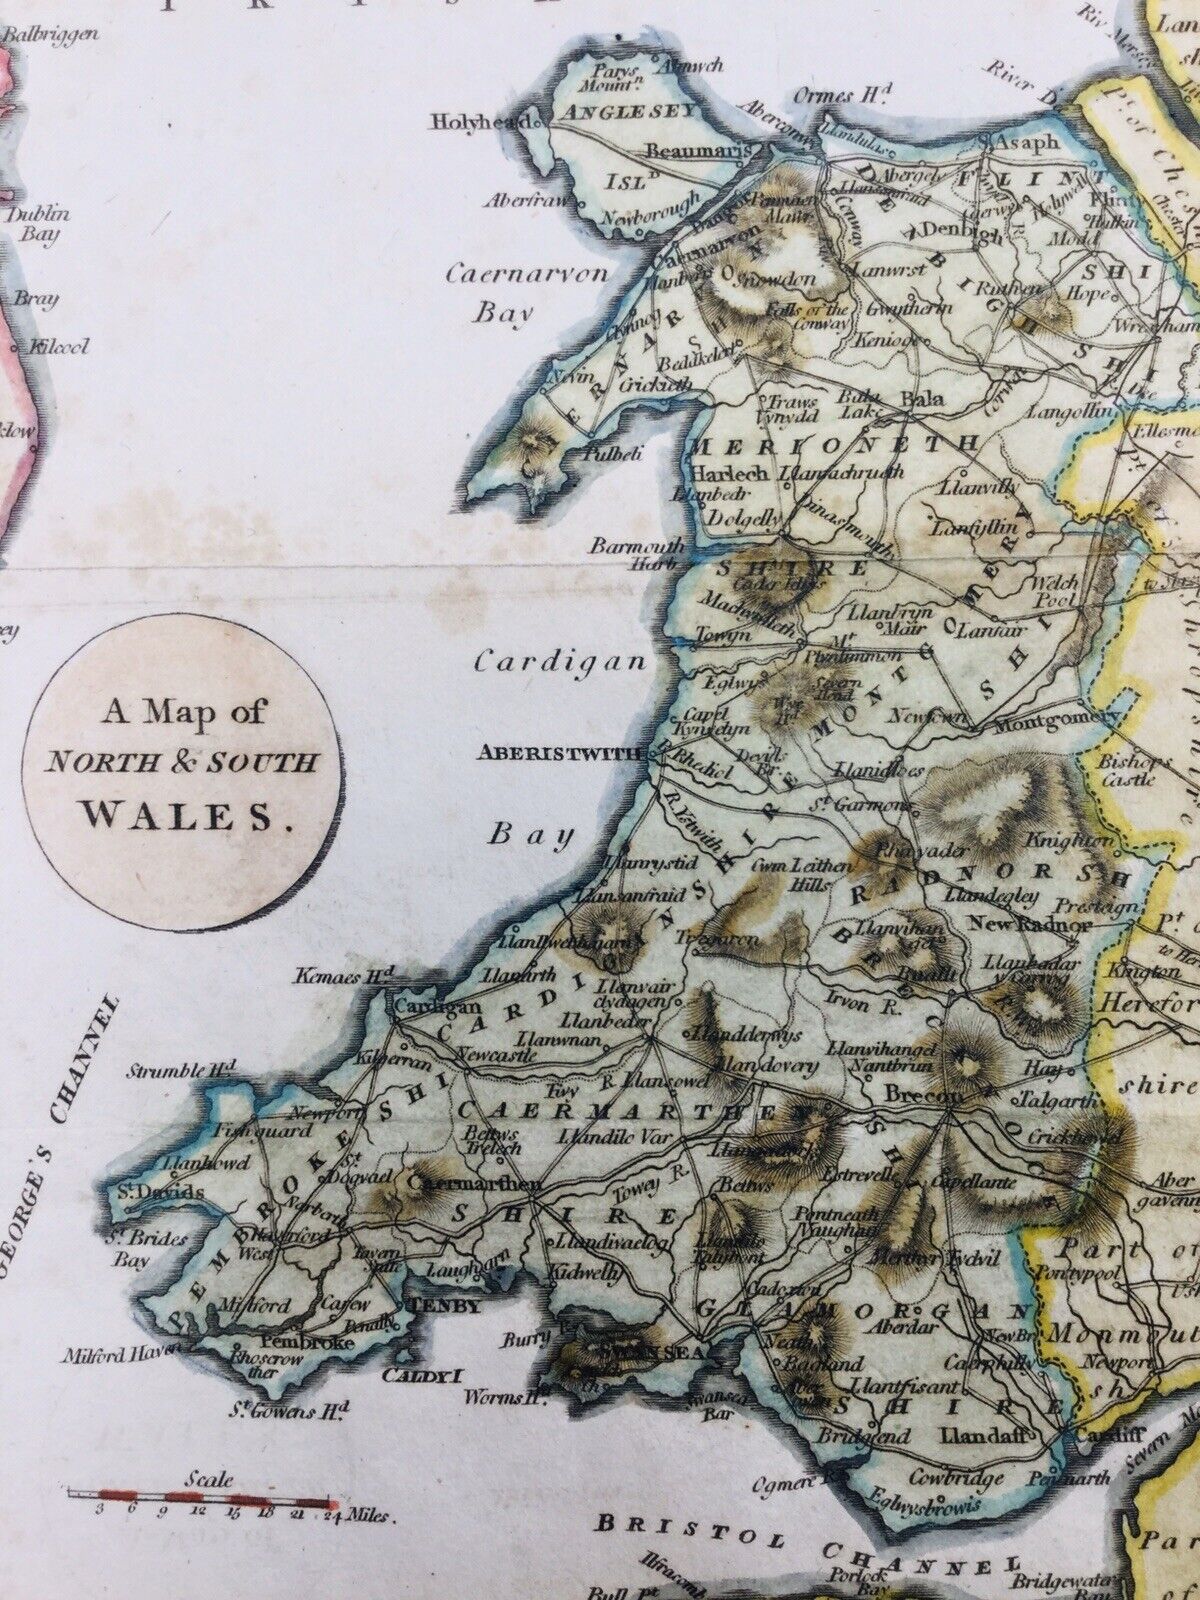 Wales 1803 Caldey Aberystwyth Milford Haven Pembroke Fishguard Brecon Tenby